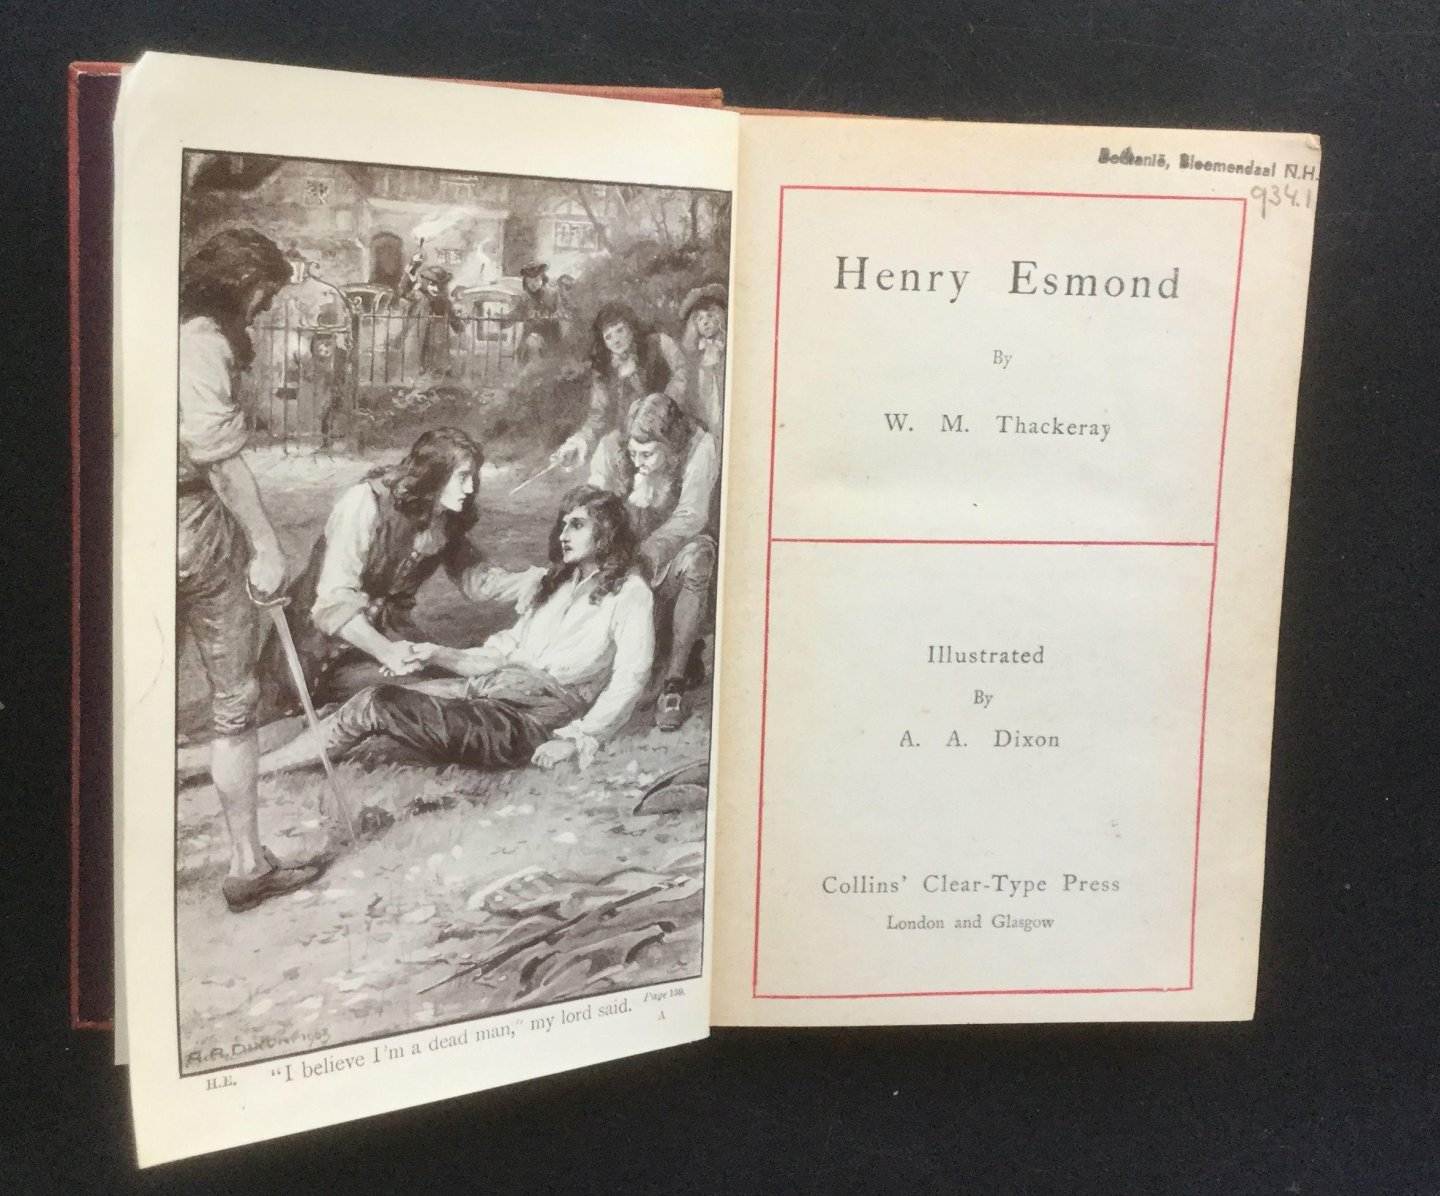 W.M. Thackeray - Henry Esmond